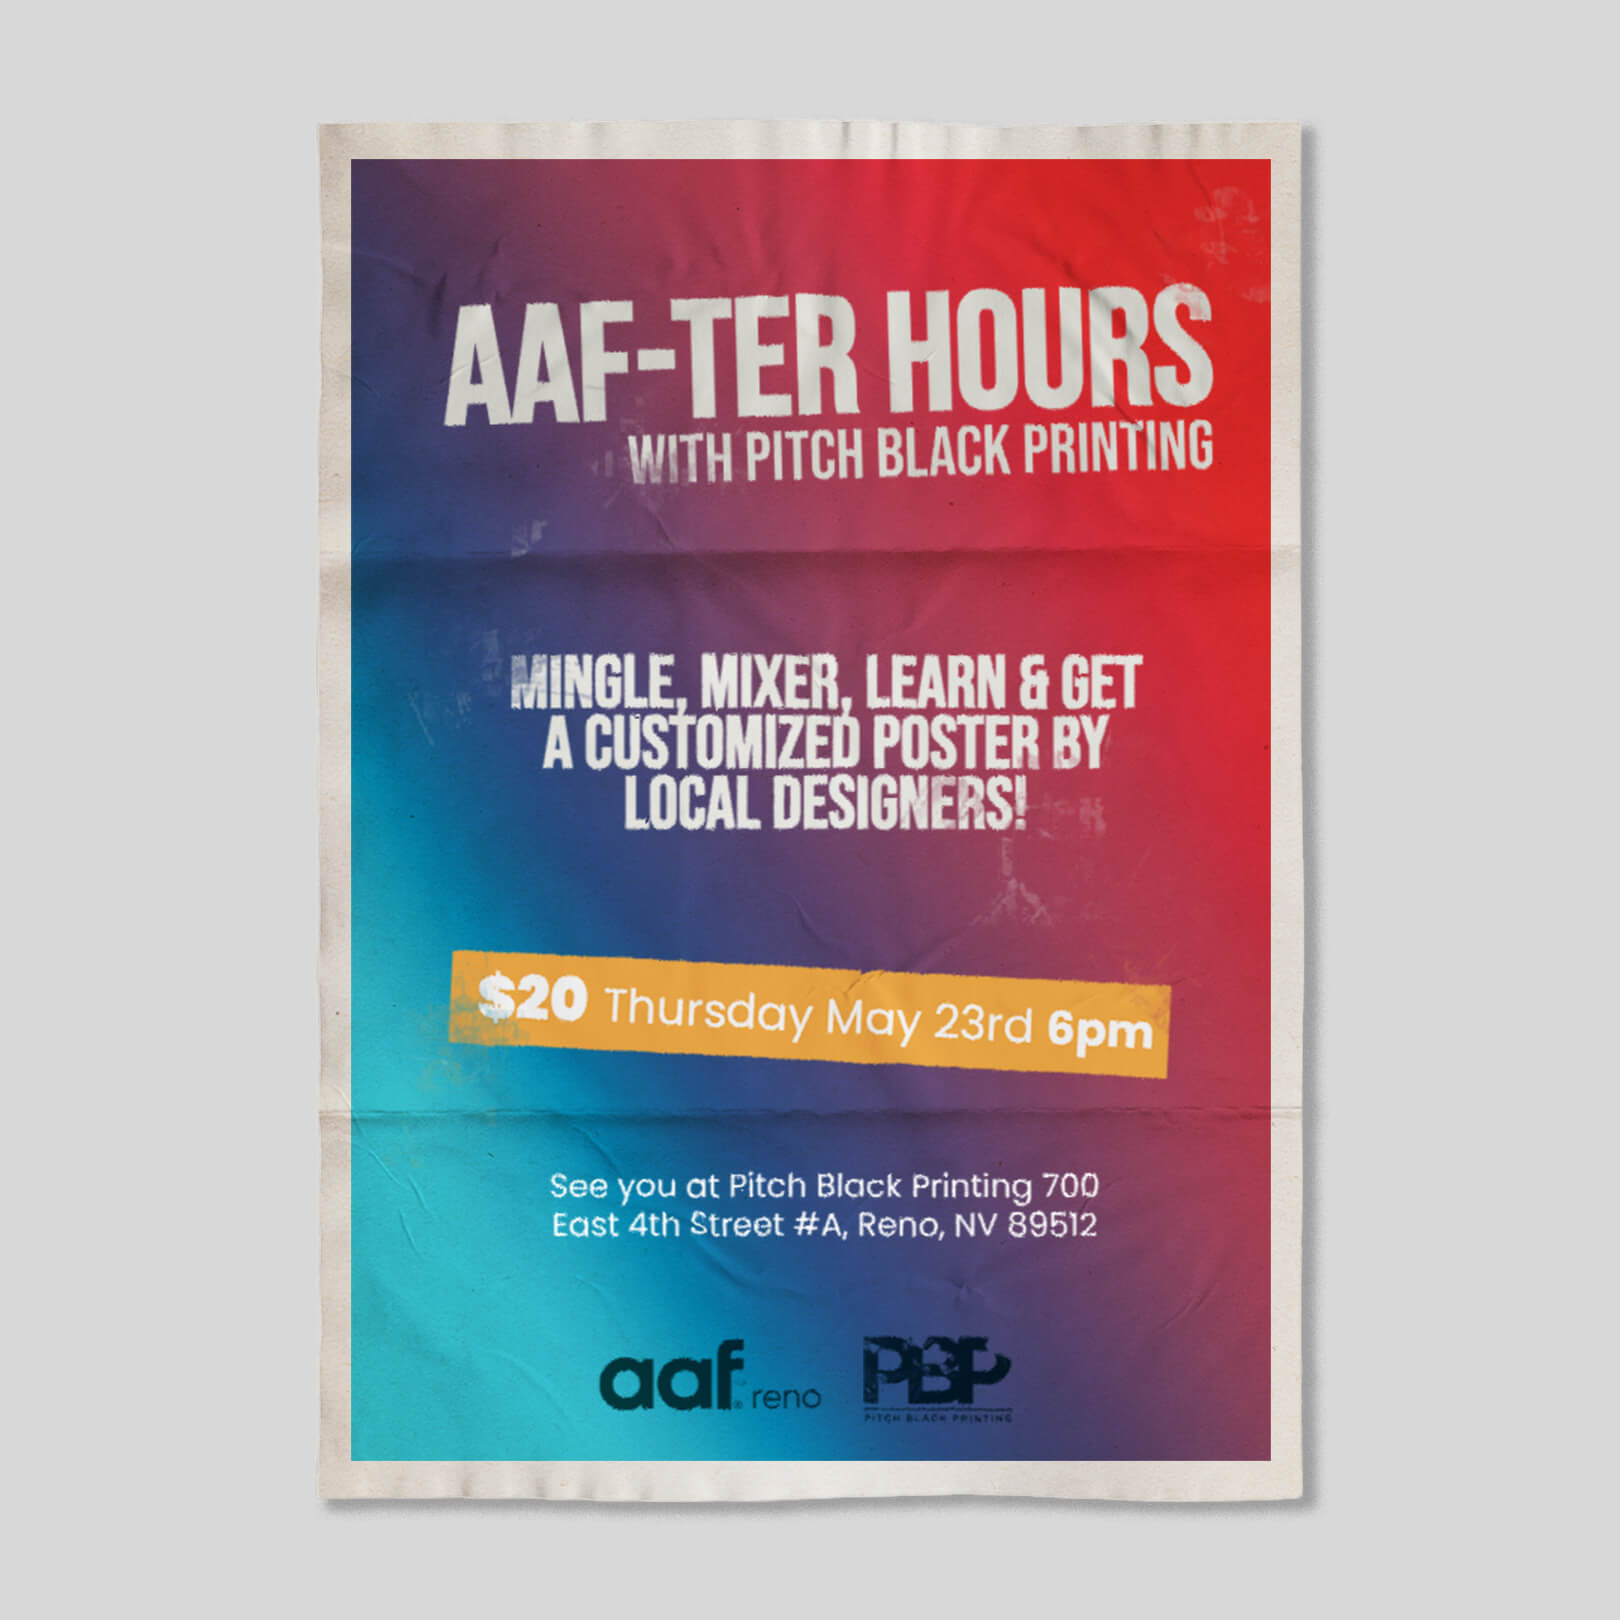 AAF-ter Hours w/ Pitch Black Printing